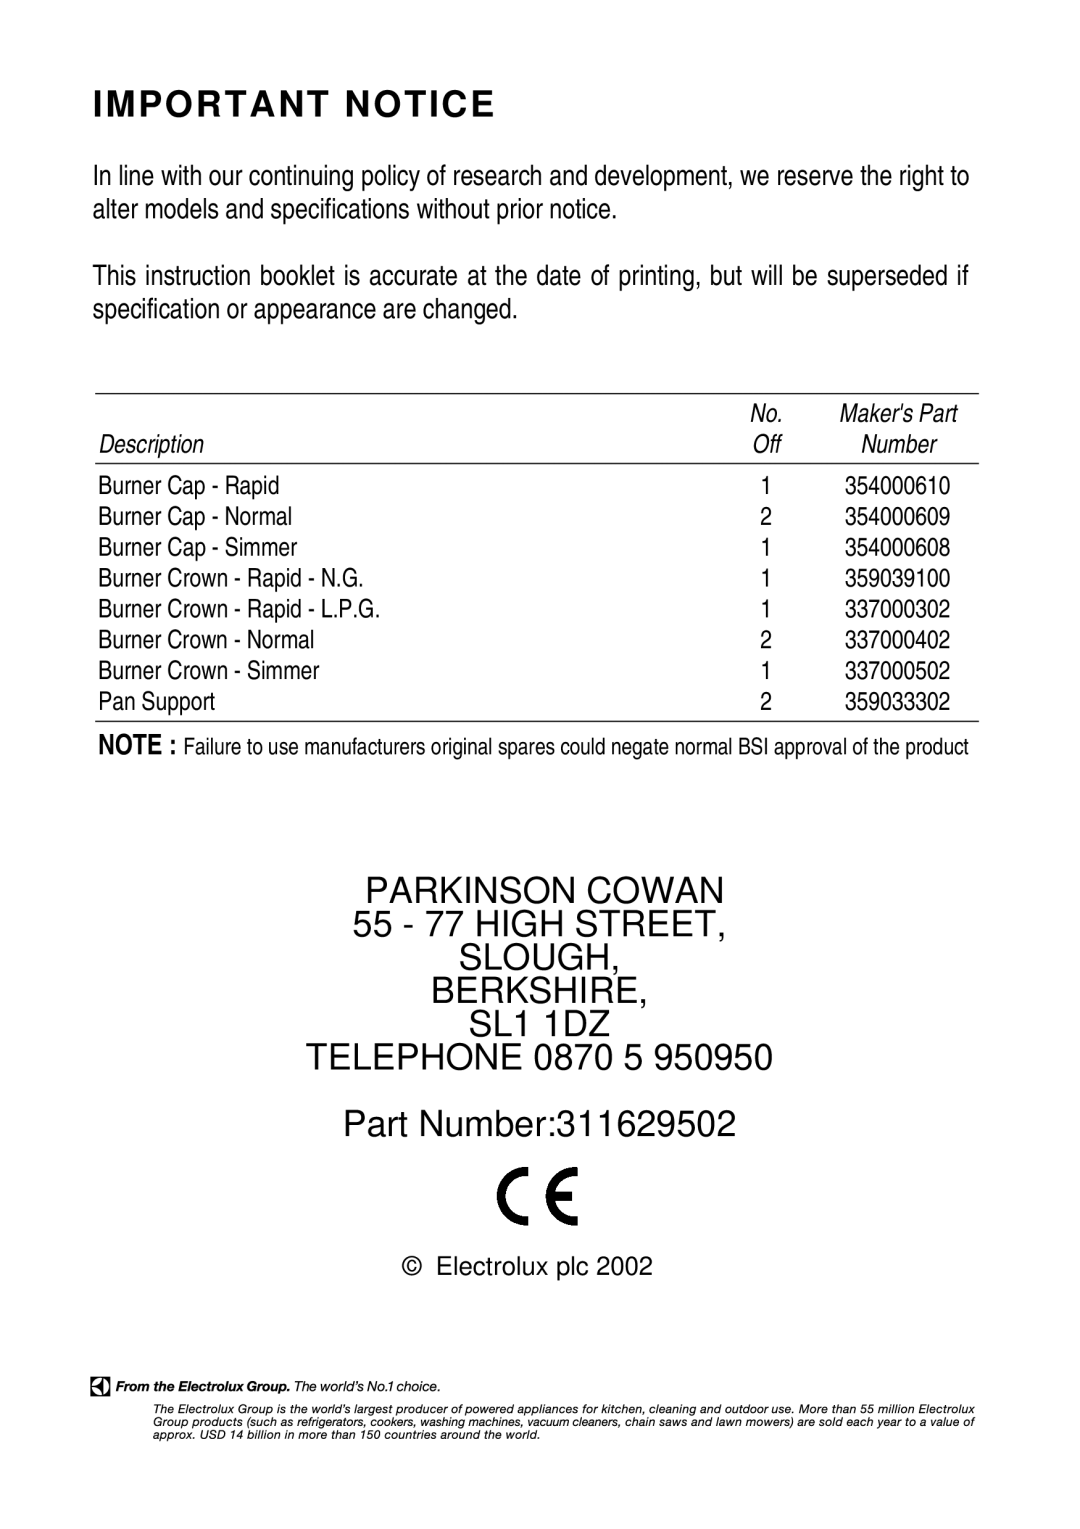 Electrolux 55V installation instructions Important Notice, PARKINSON COWAN 55 - 77 HIGH STREET, SLOUGH, BERKSHIRE SL1 1DZ 